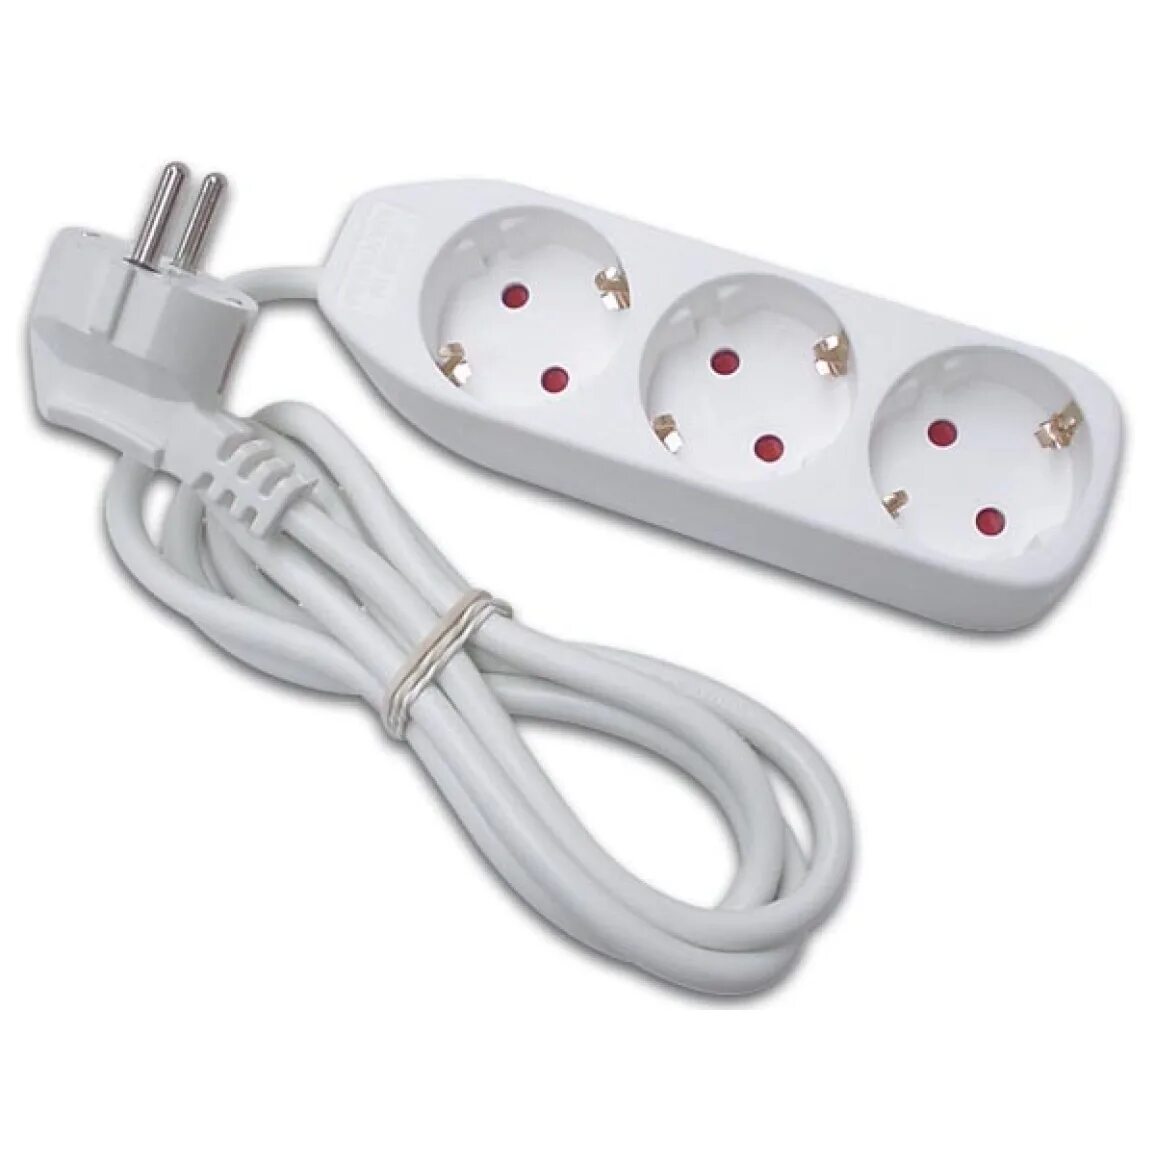 F eu. Sockets 3 way. 3-Plug Socket. Cable Socket. 3x выключатель.